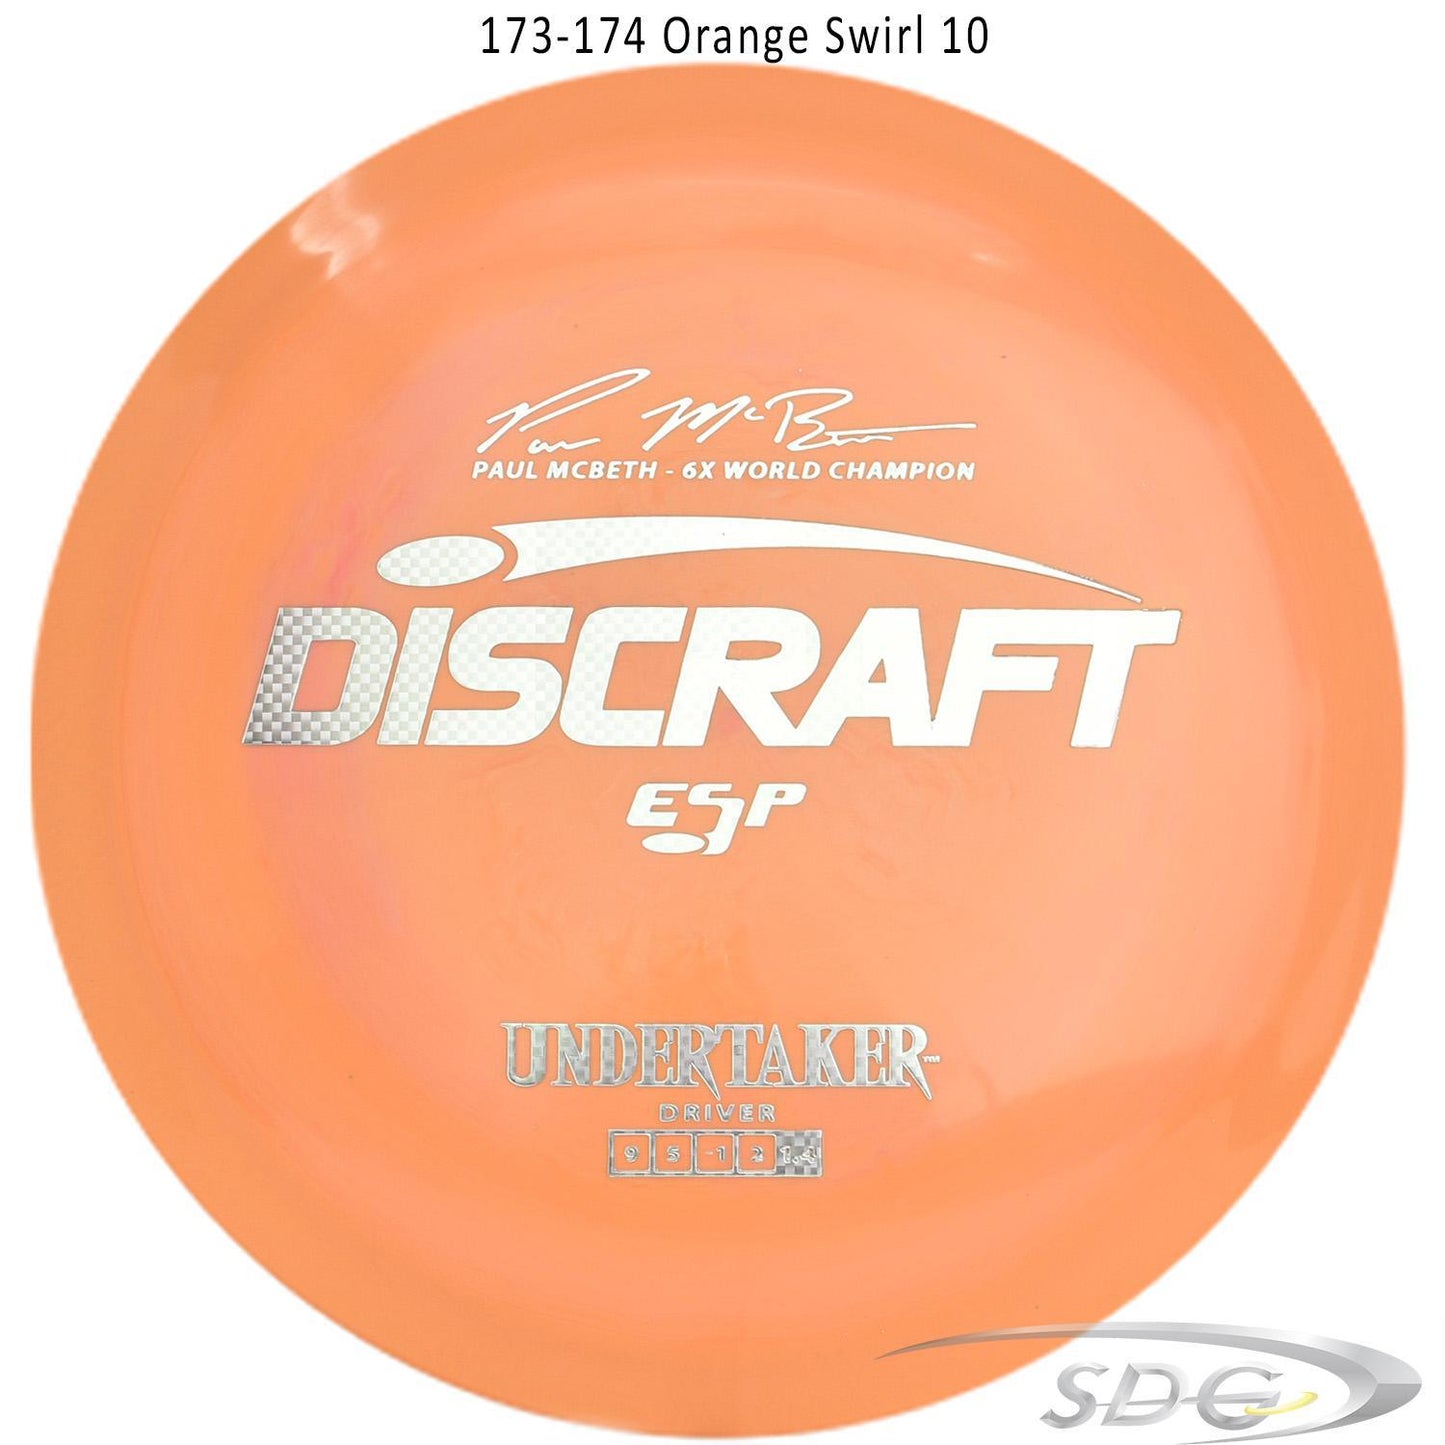 discraft-esp-undertaker-6x-paul-mcbeth-signature-series-disc-golf-distance-driver-1 173-174 Orange 10 